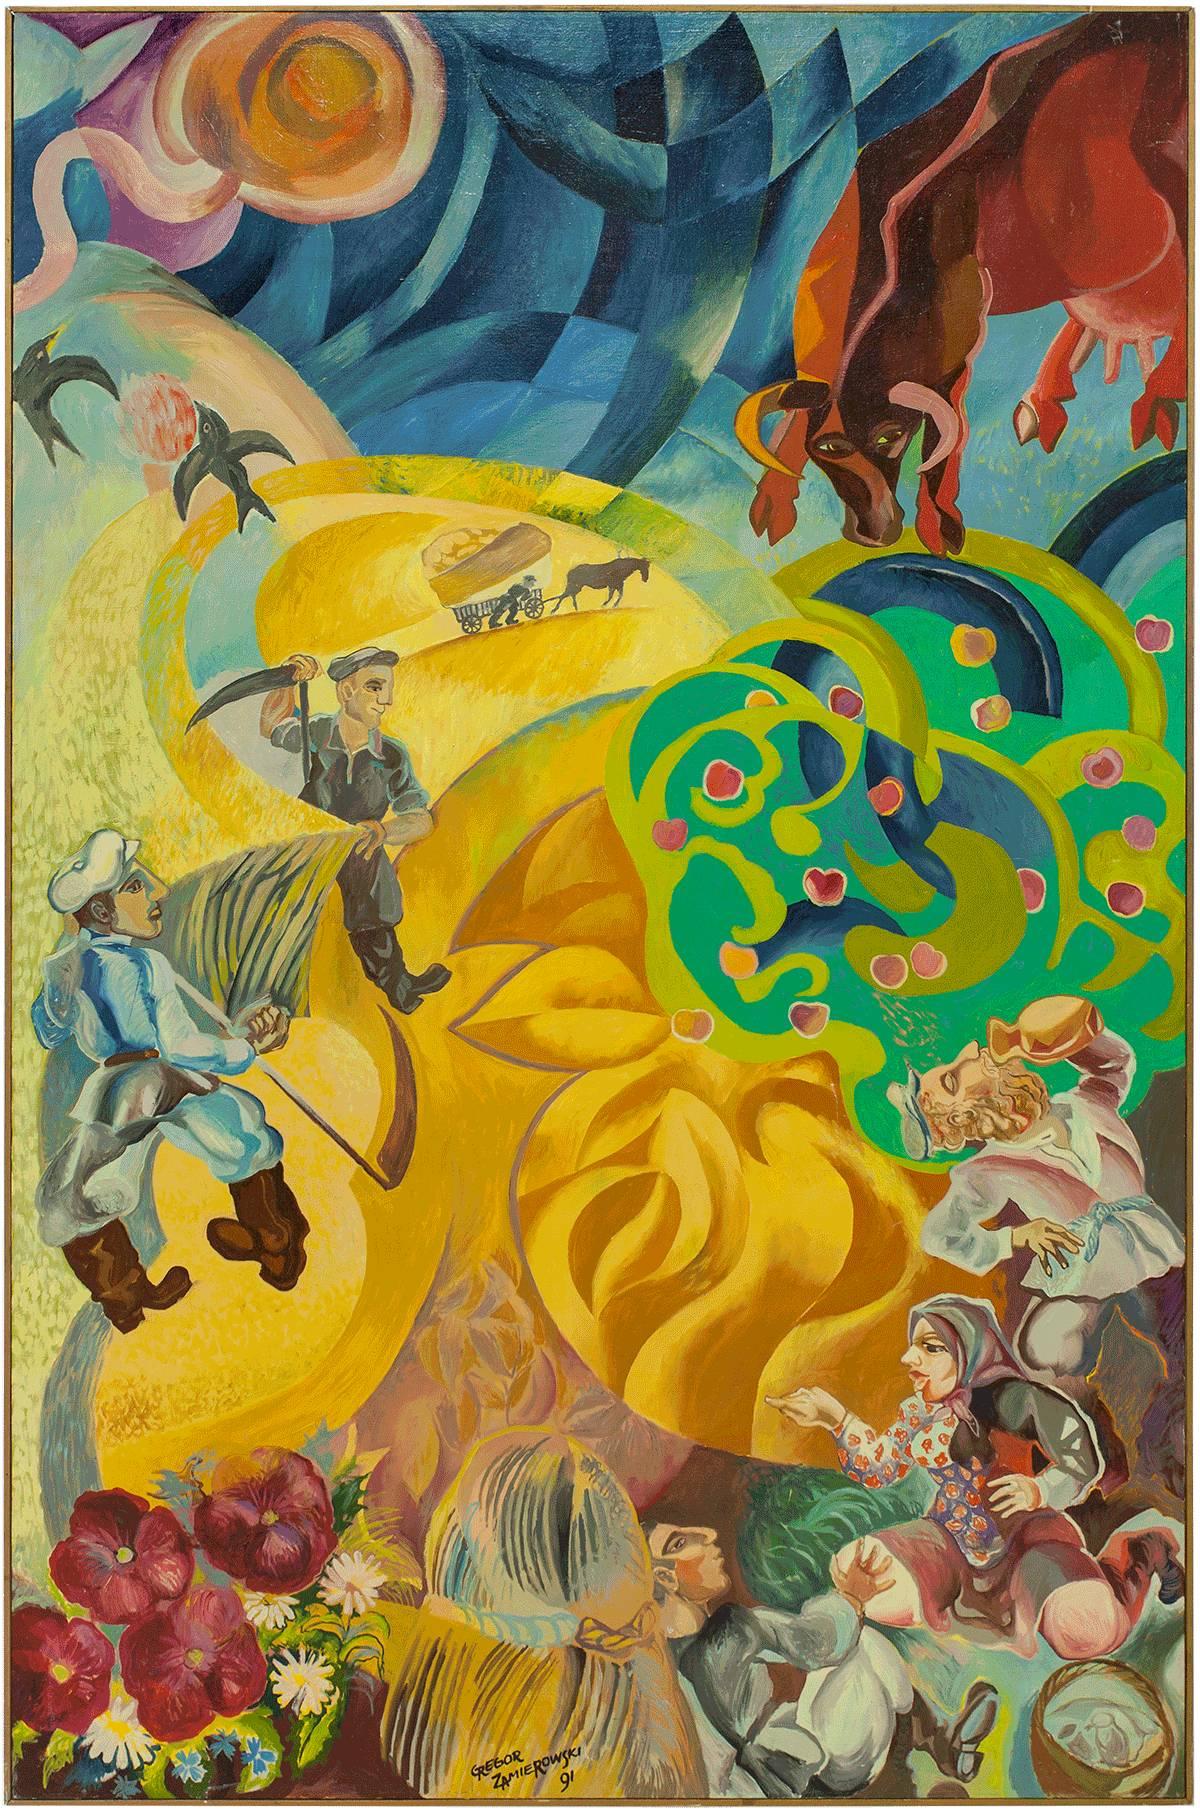 Gregor Zamierowski Figurative Painting - Huge Oil Painting by Russian Canadian Artist. Cubist Soviet Scene